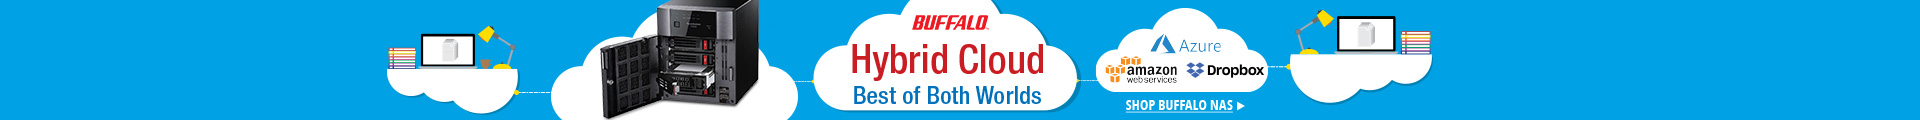 Buffalo Hybrid Cloud